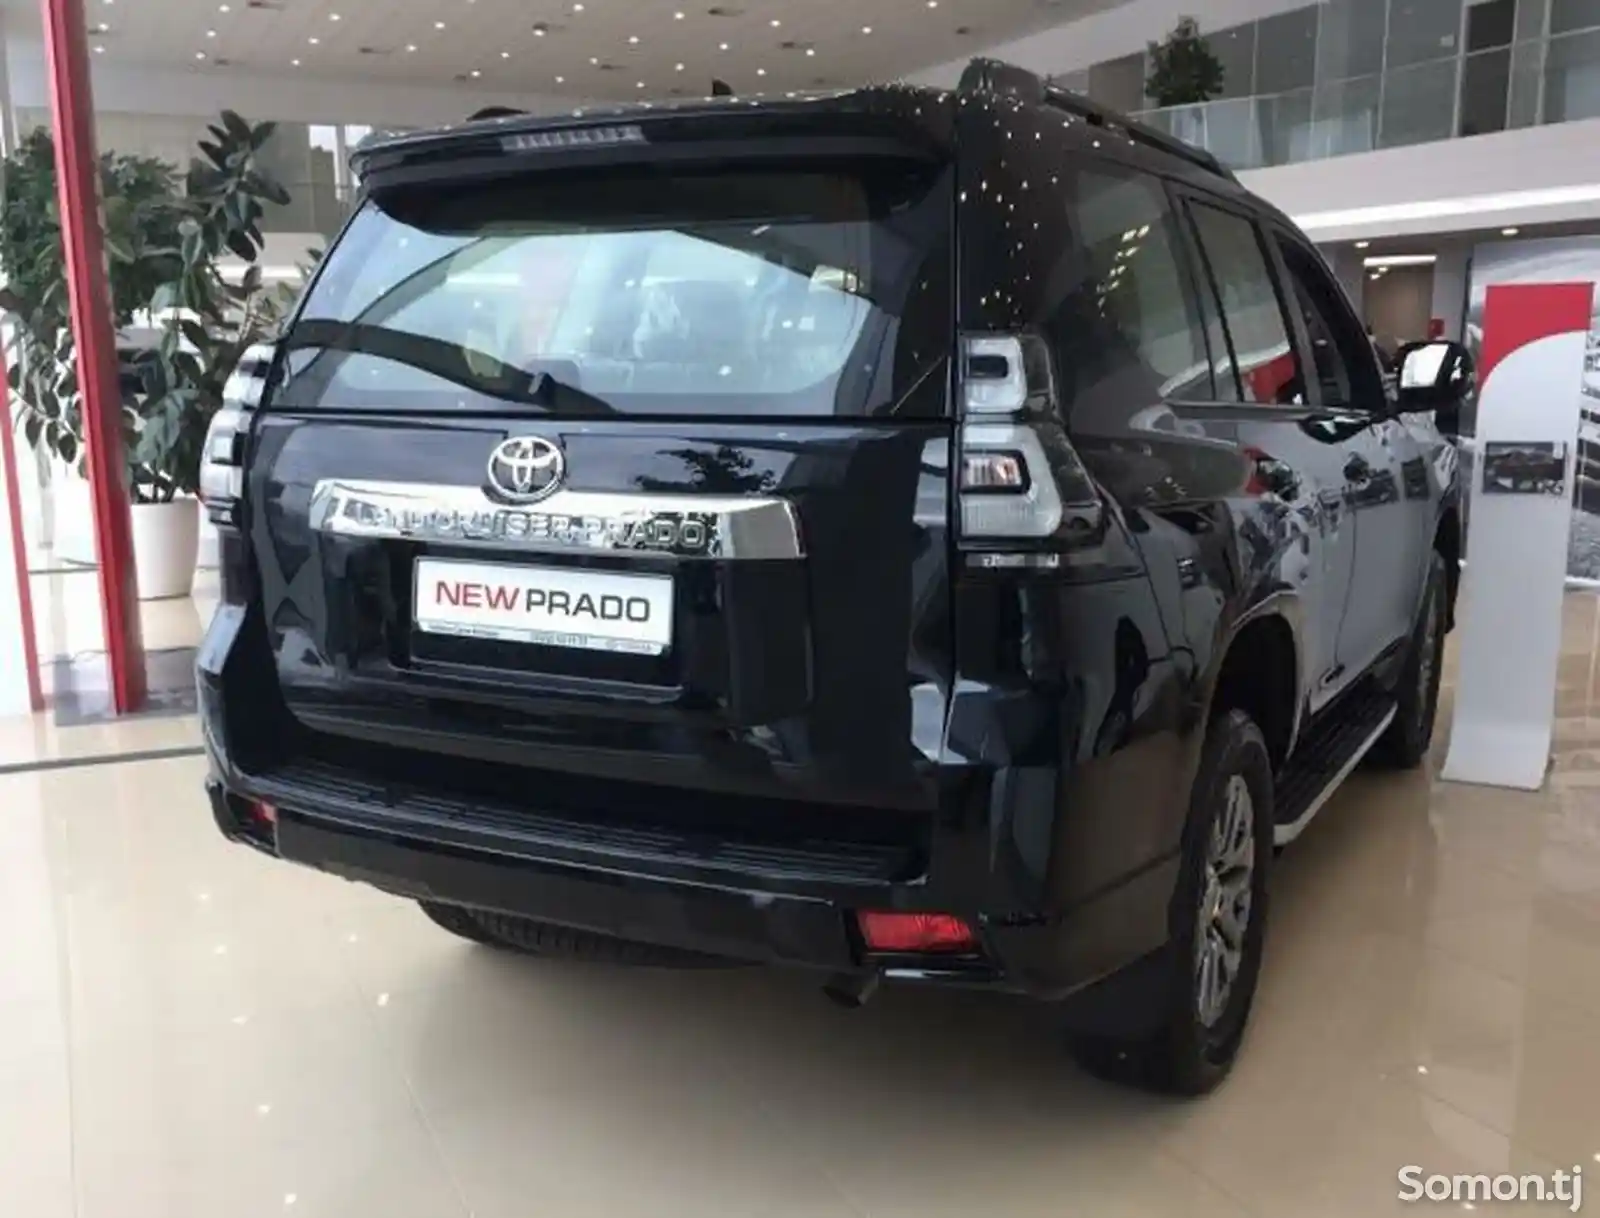 Задние стоп фары Black на Toyota Prado 2018--2